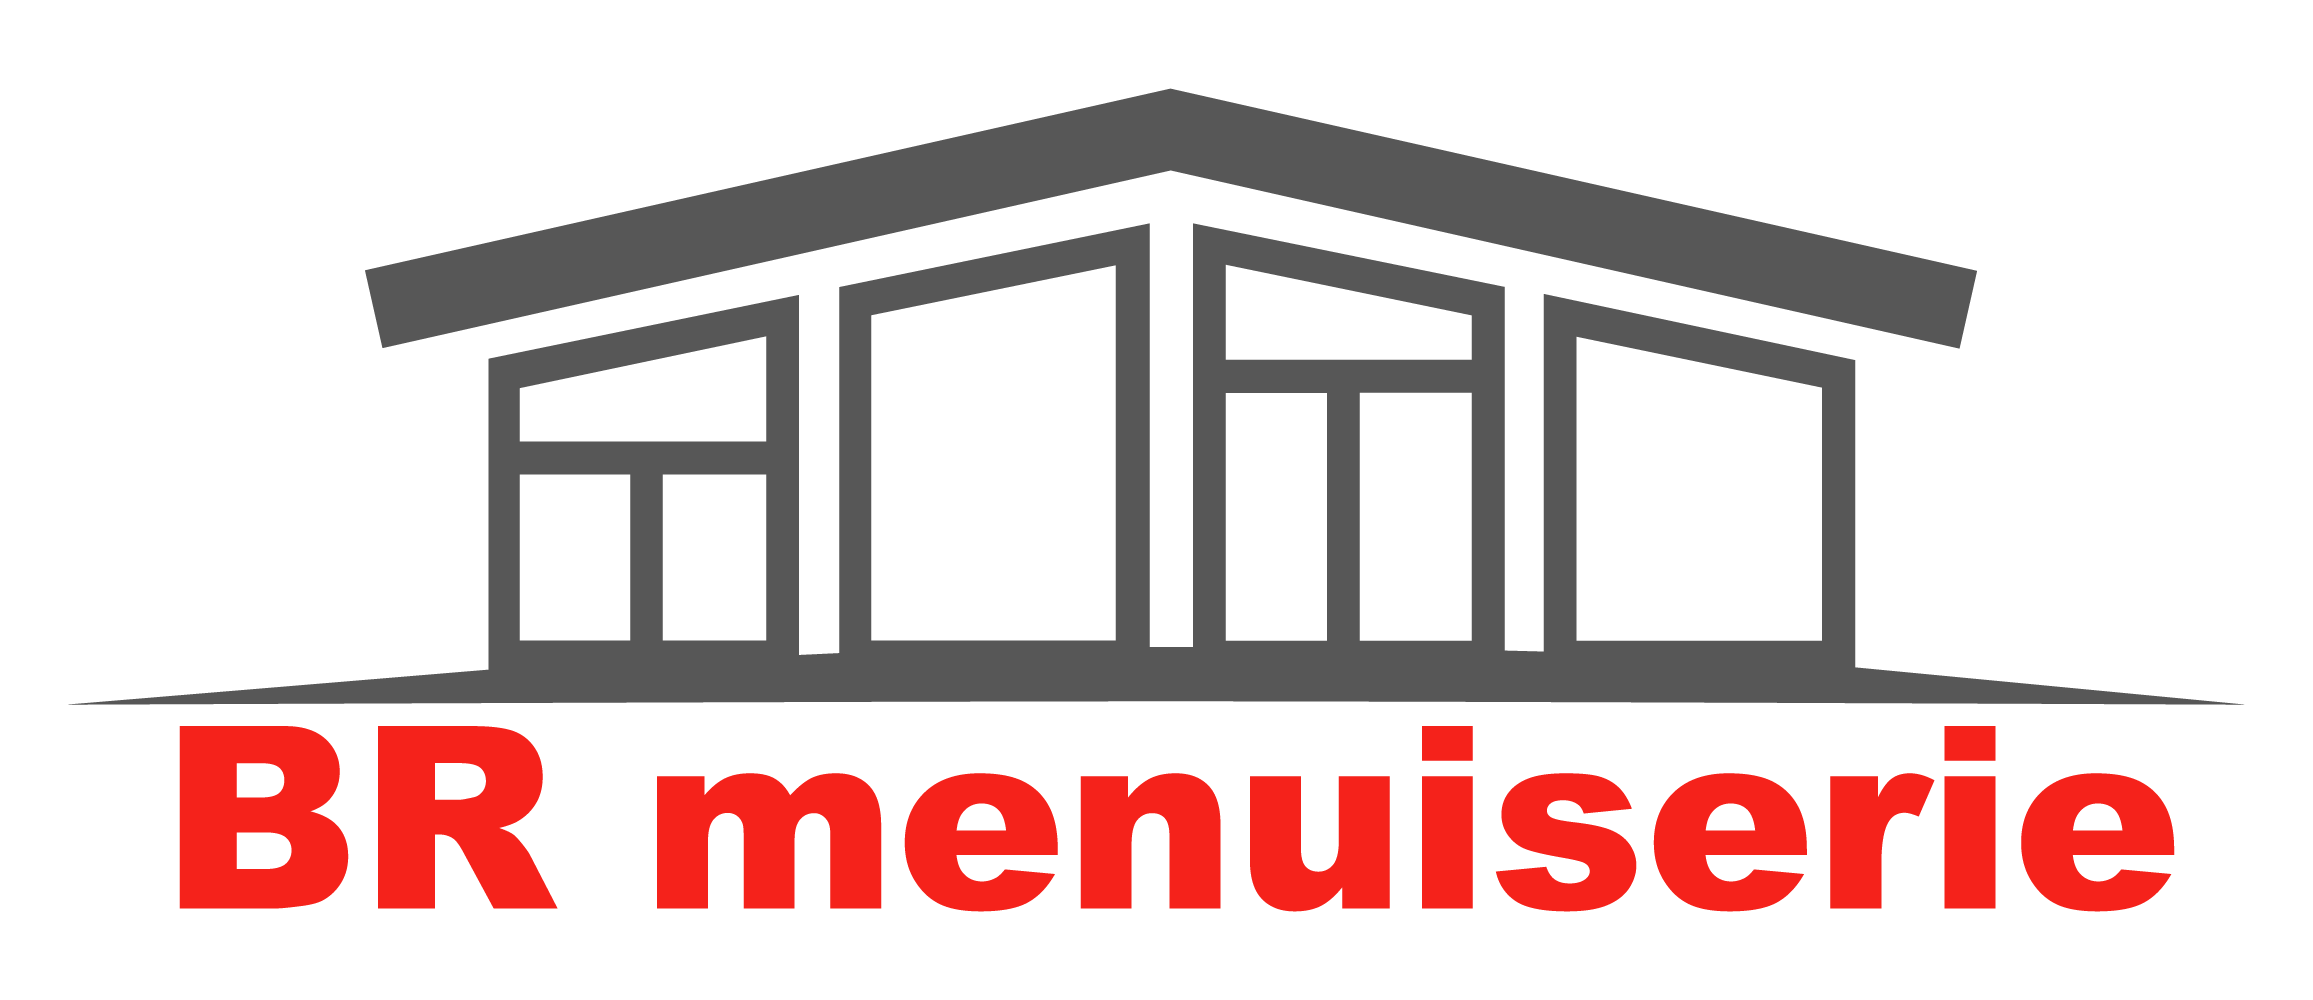 logo-BR MENUISERIE